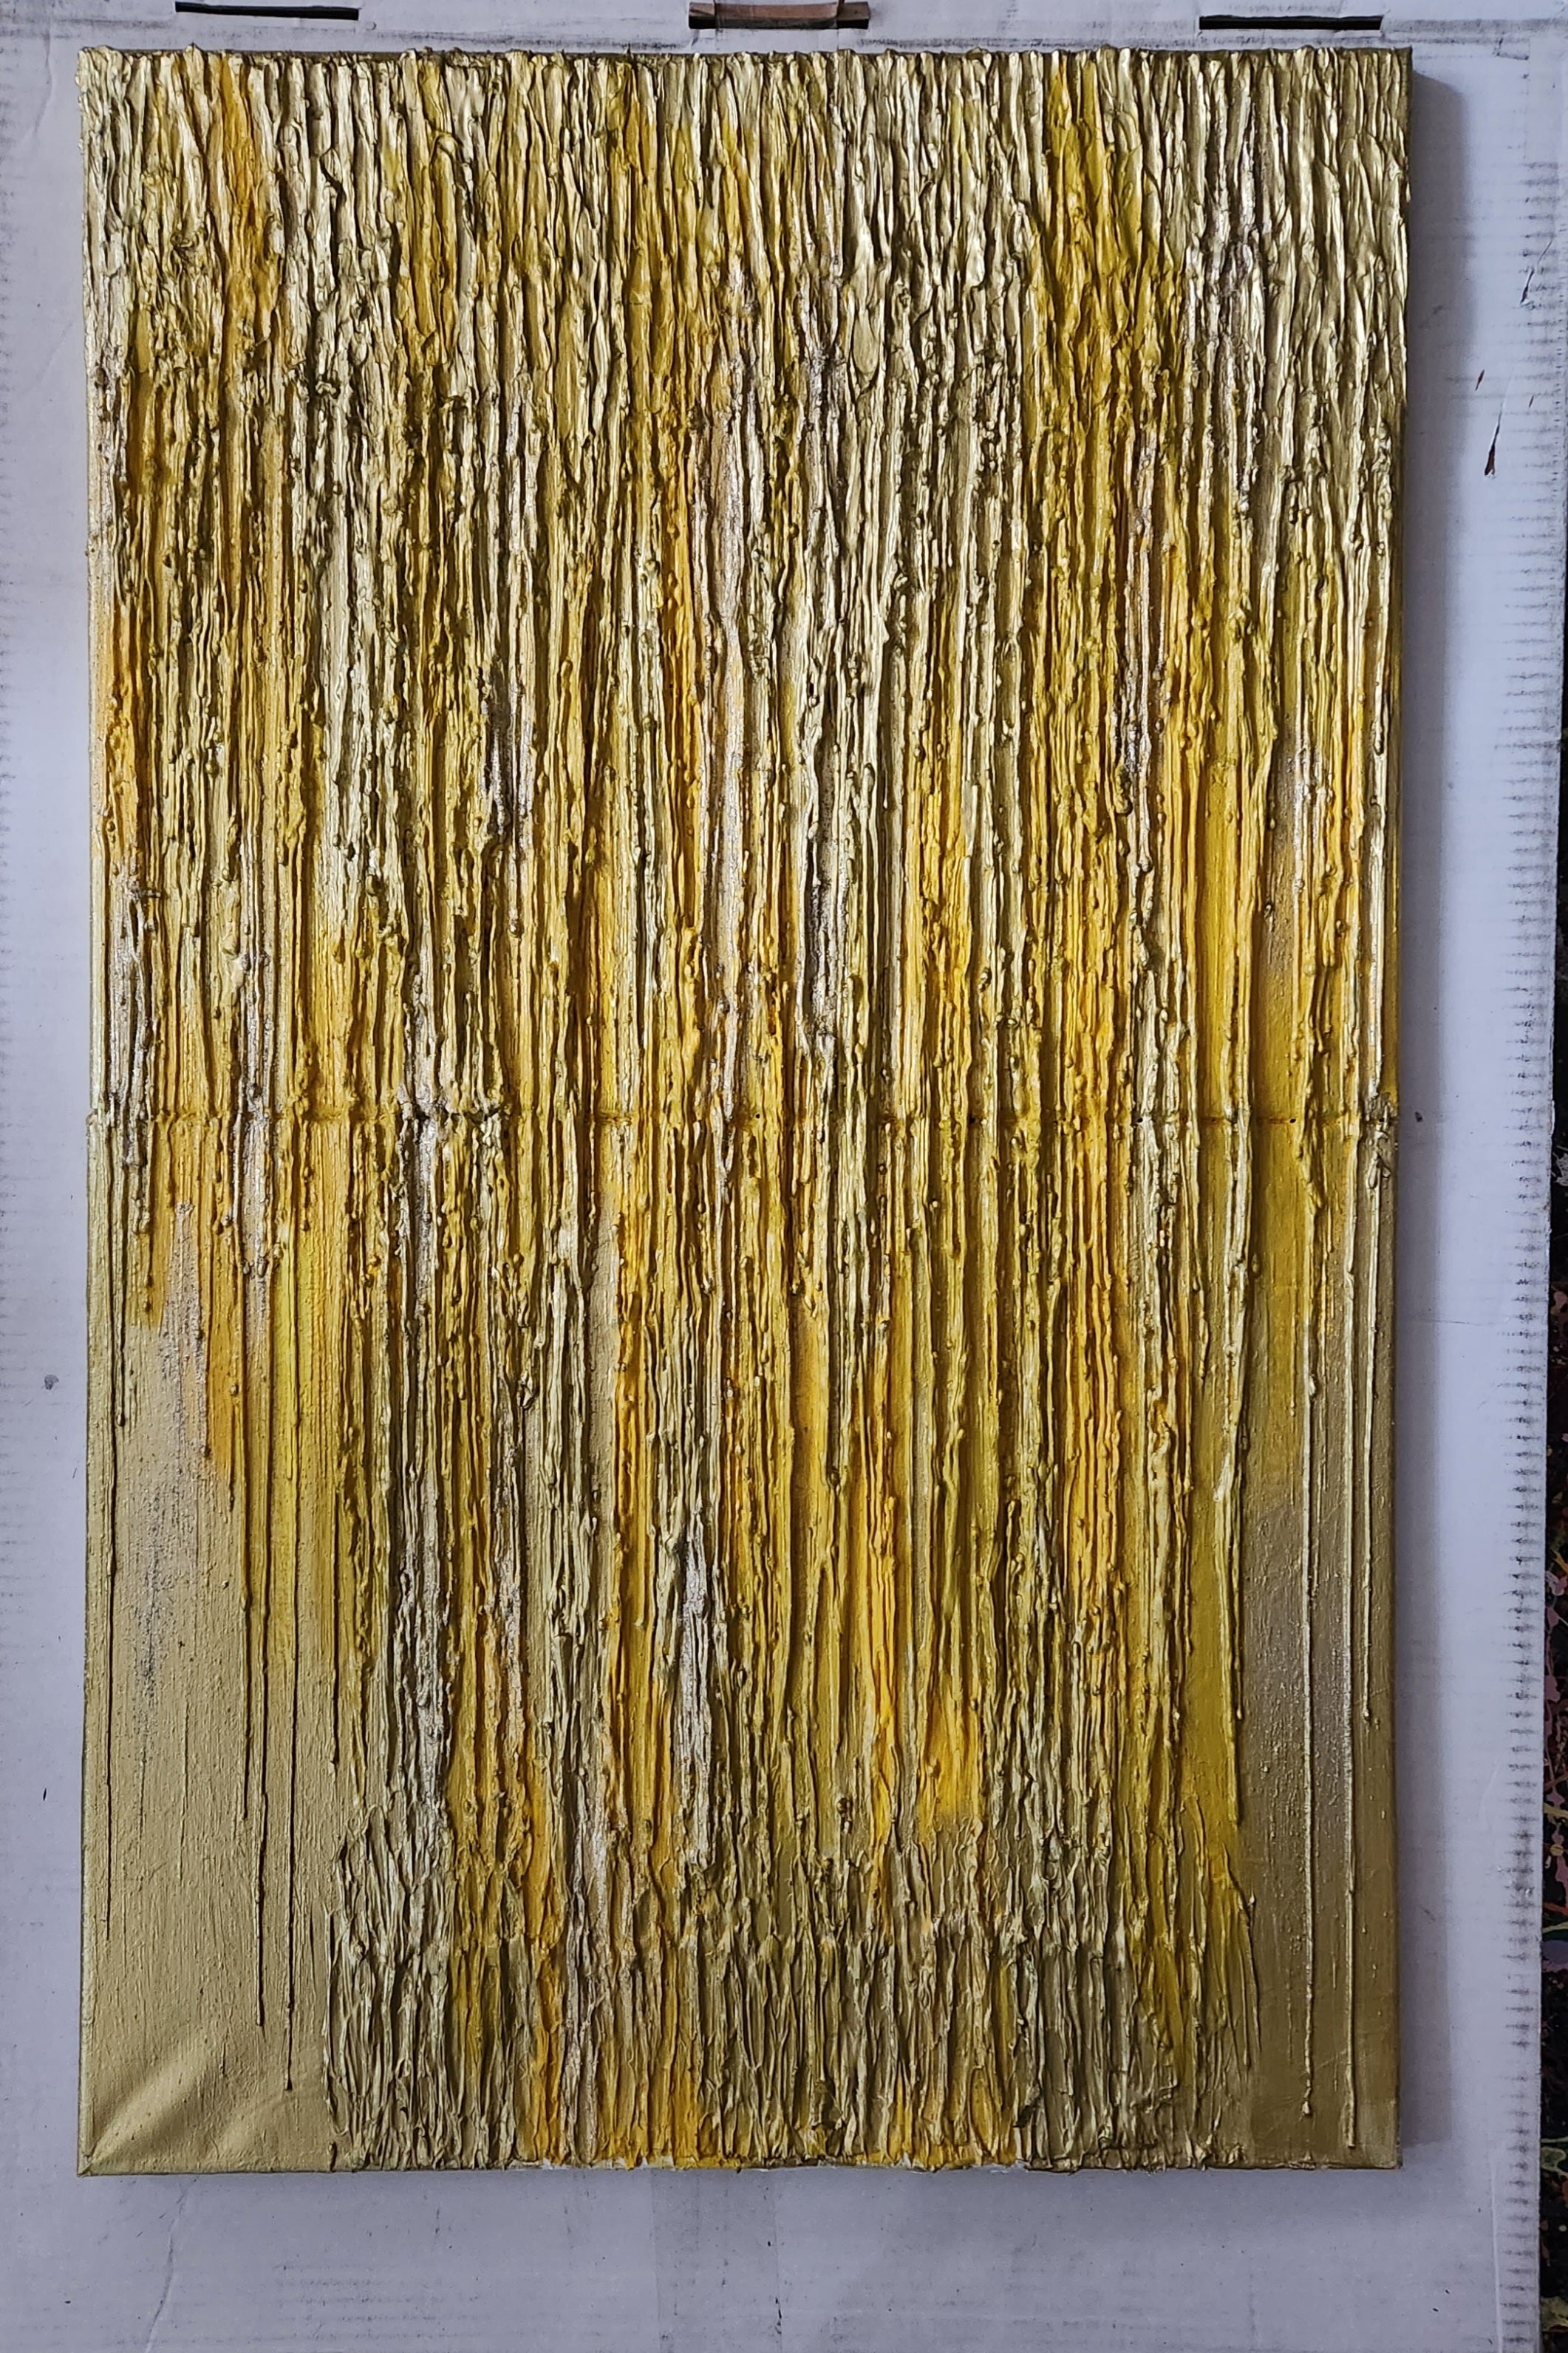 'GOLD MELTING' Acrylic, Crayon, and Mixed Media on Canvas